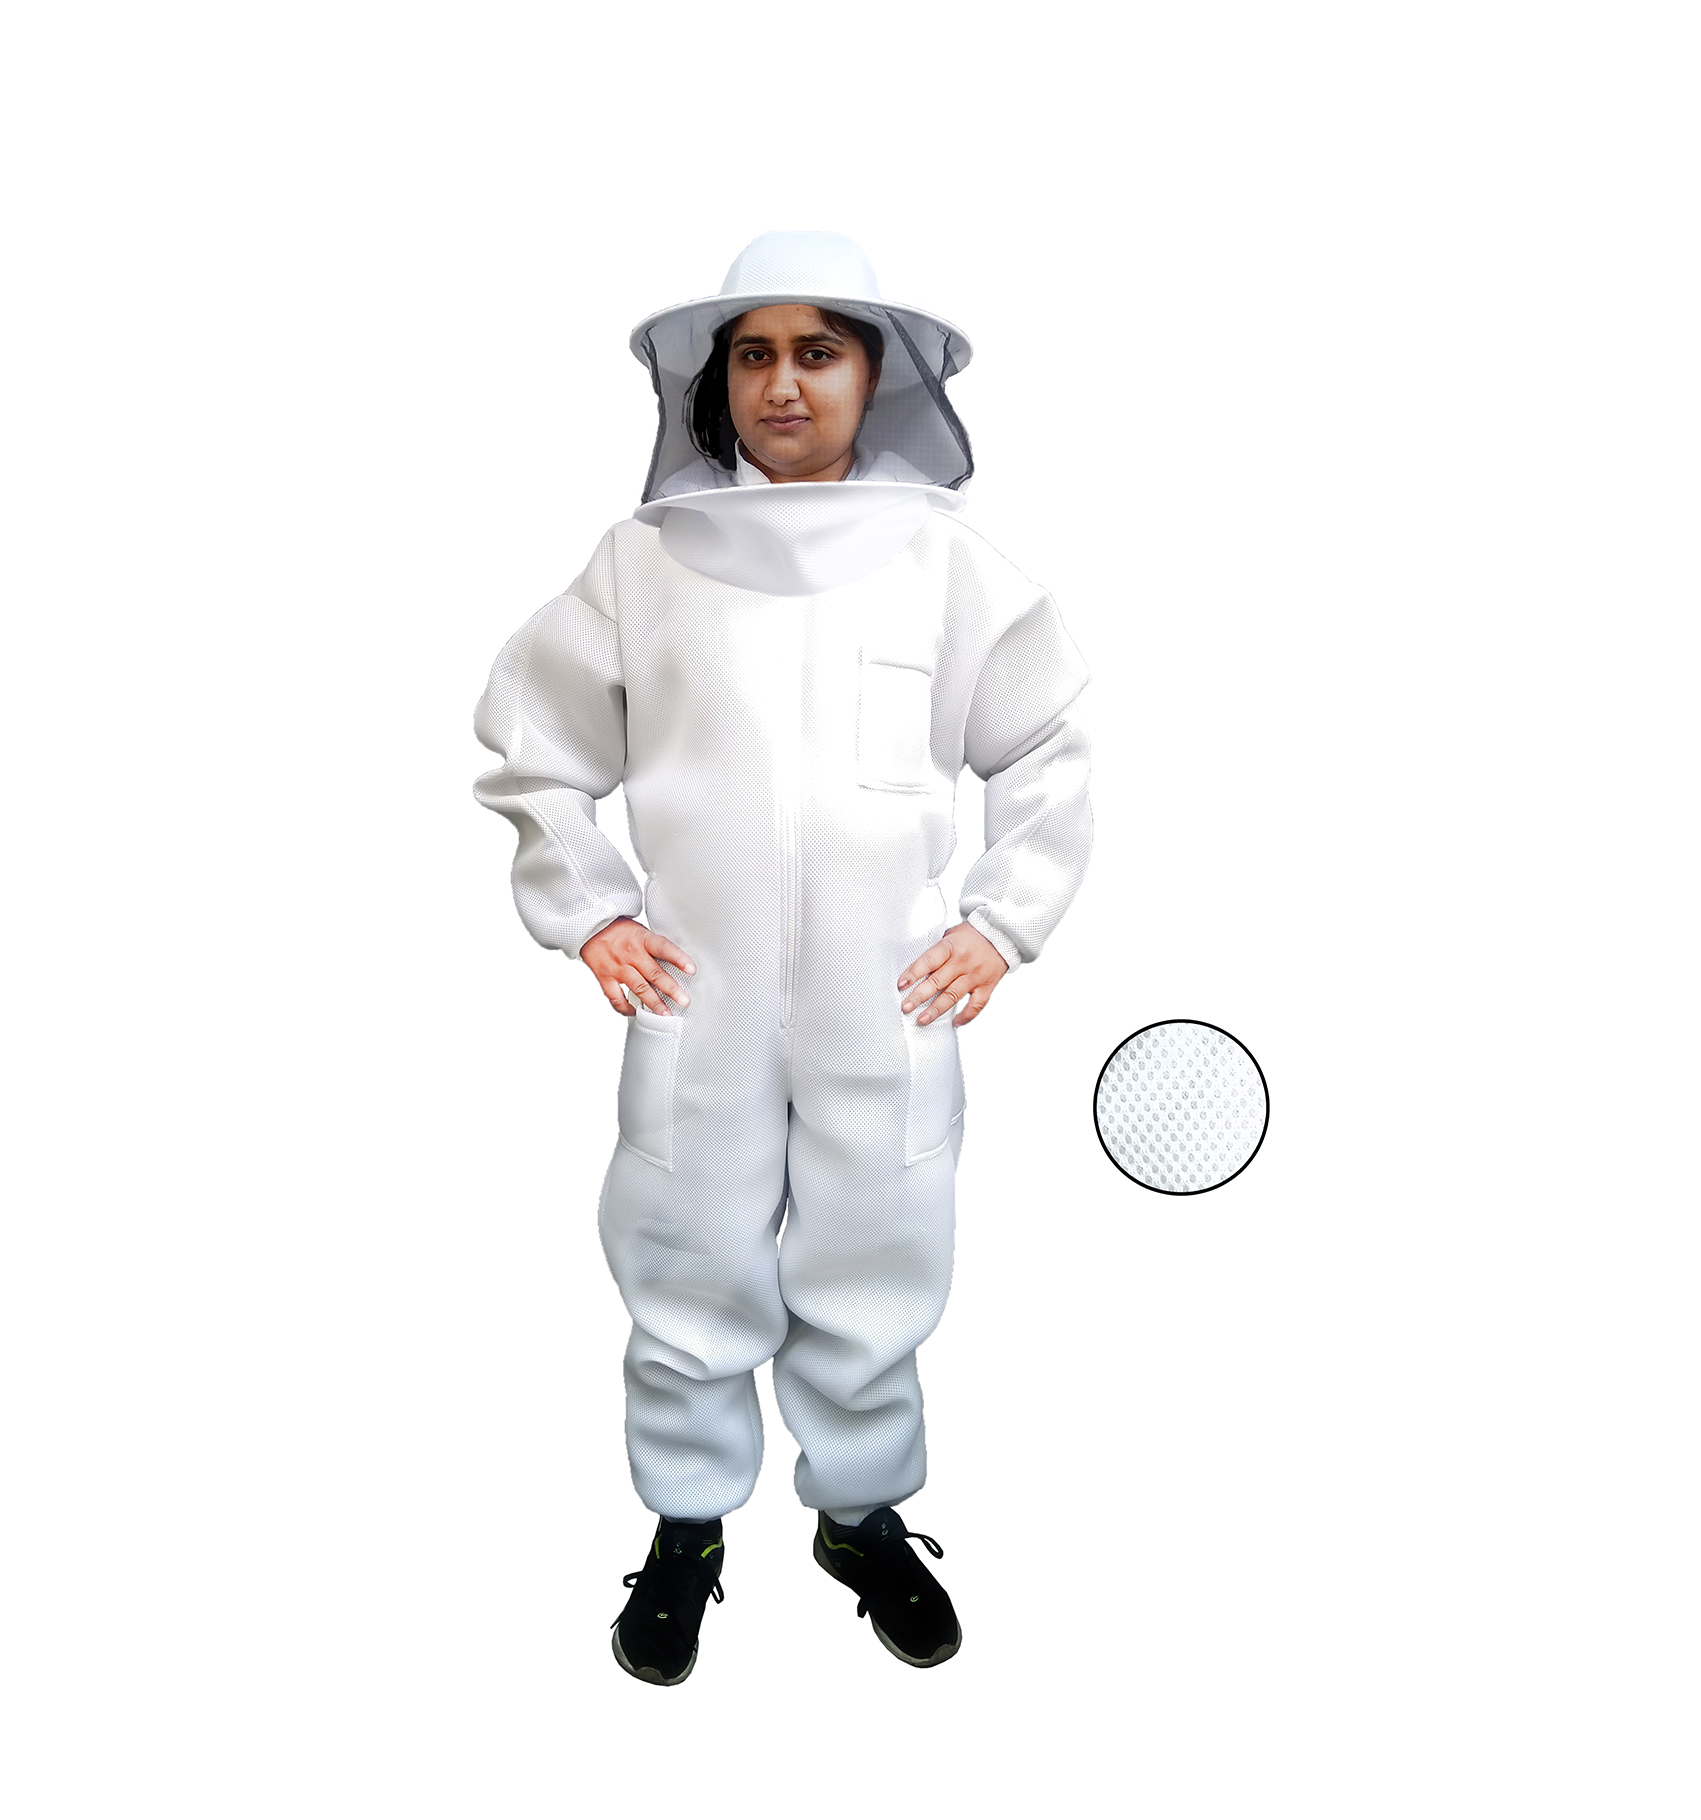 S Ventilated Bee Suit Body comfort 3 layer mesh vented beekeeper Suit round hood 